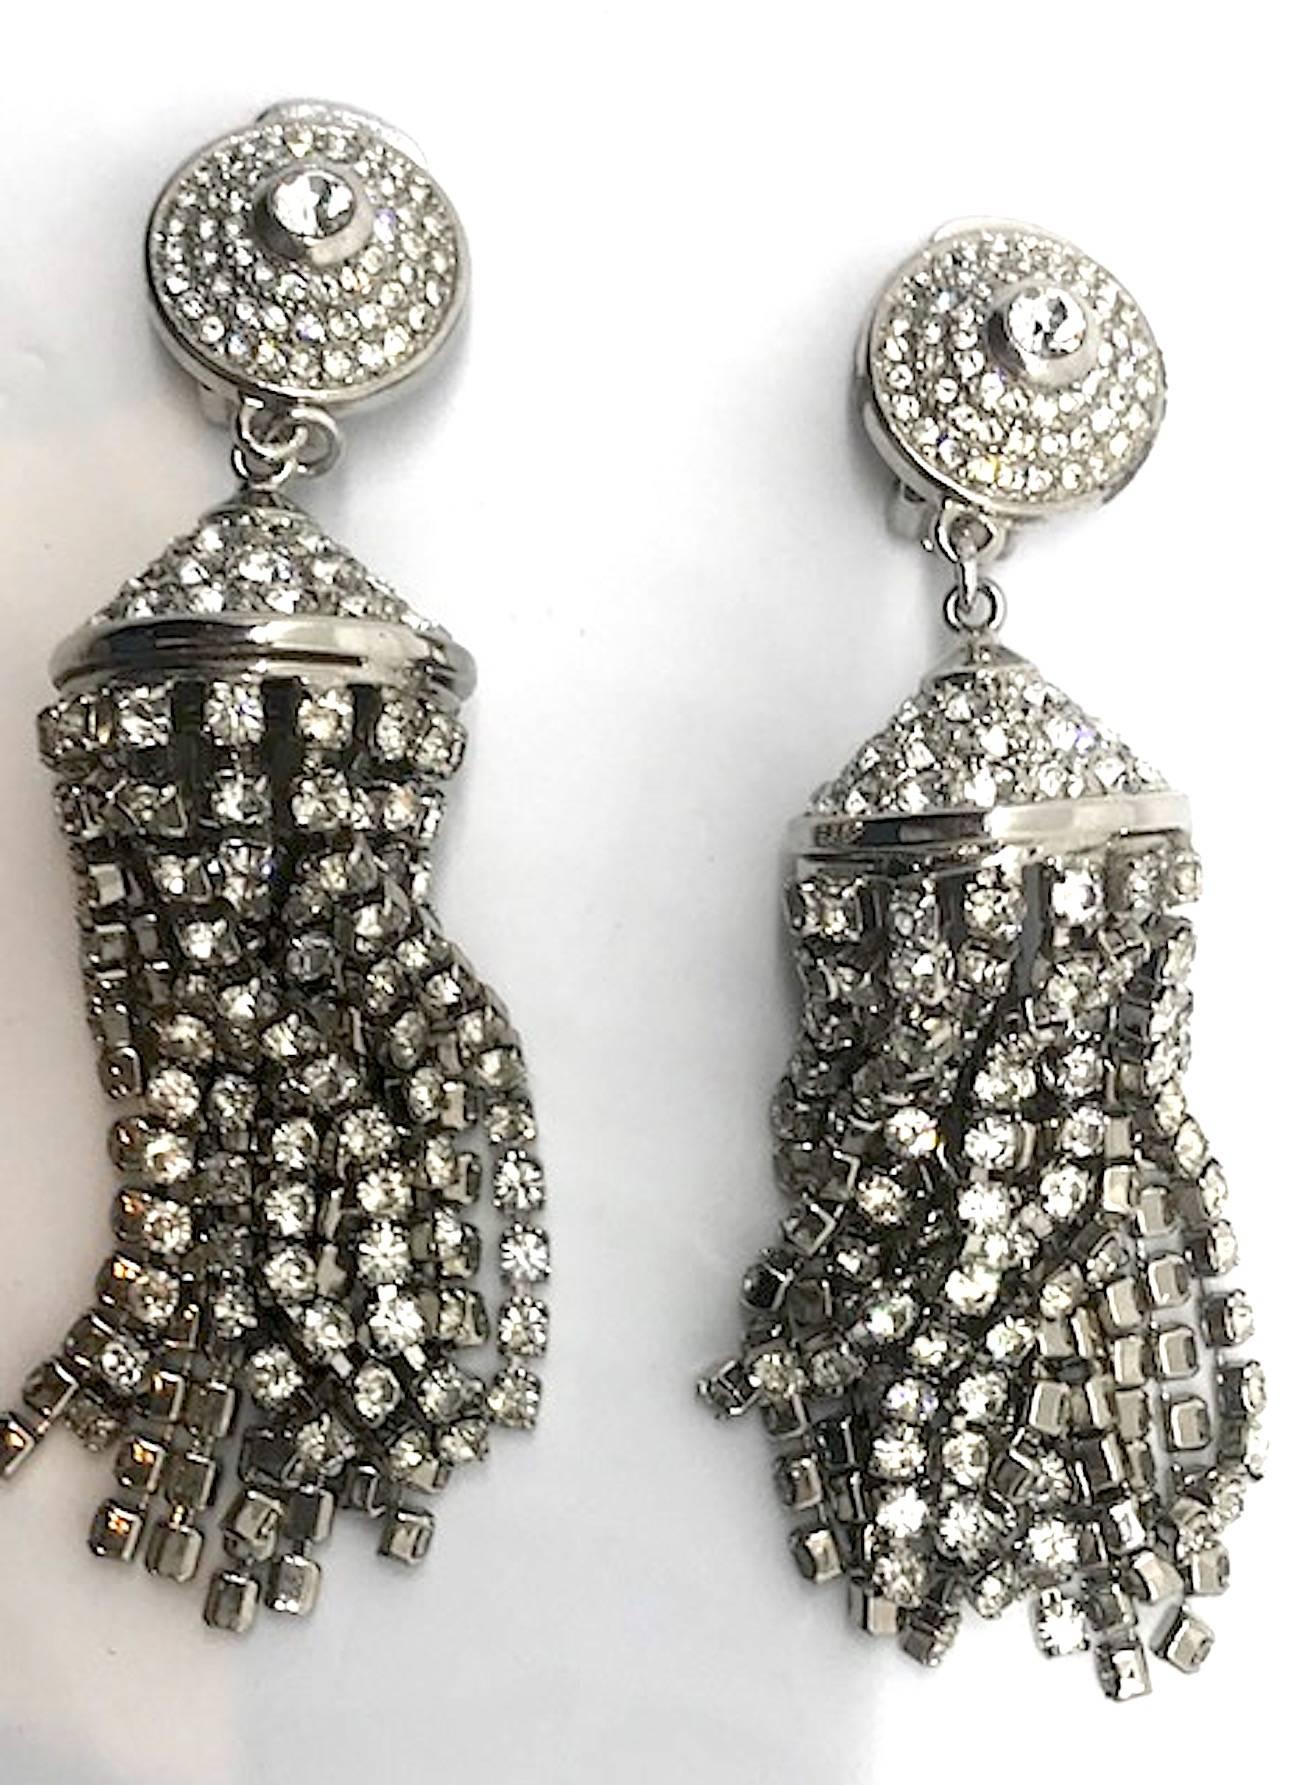 Impressive De LIguoro tassel earrings, actress Elsa Martinelli's collection 1